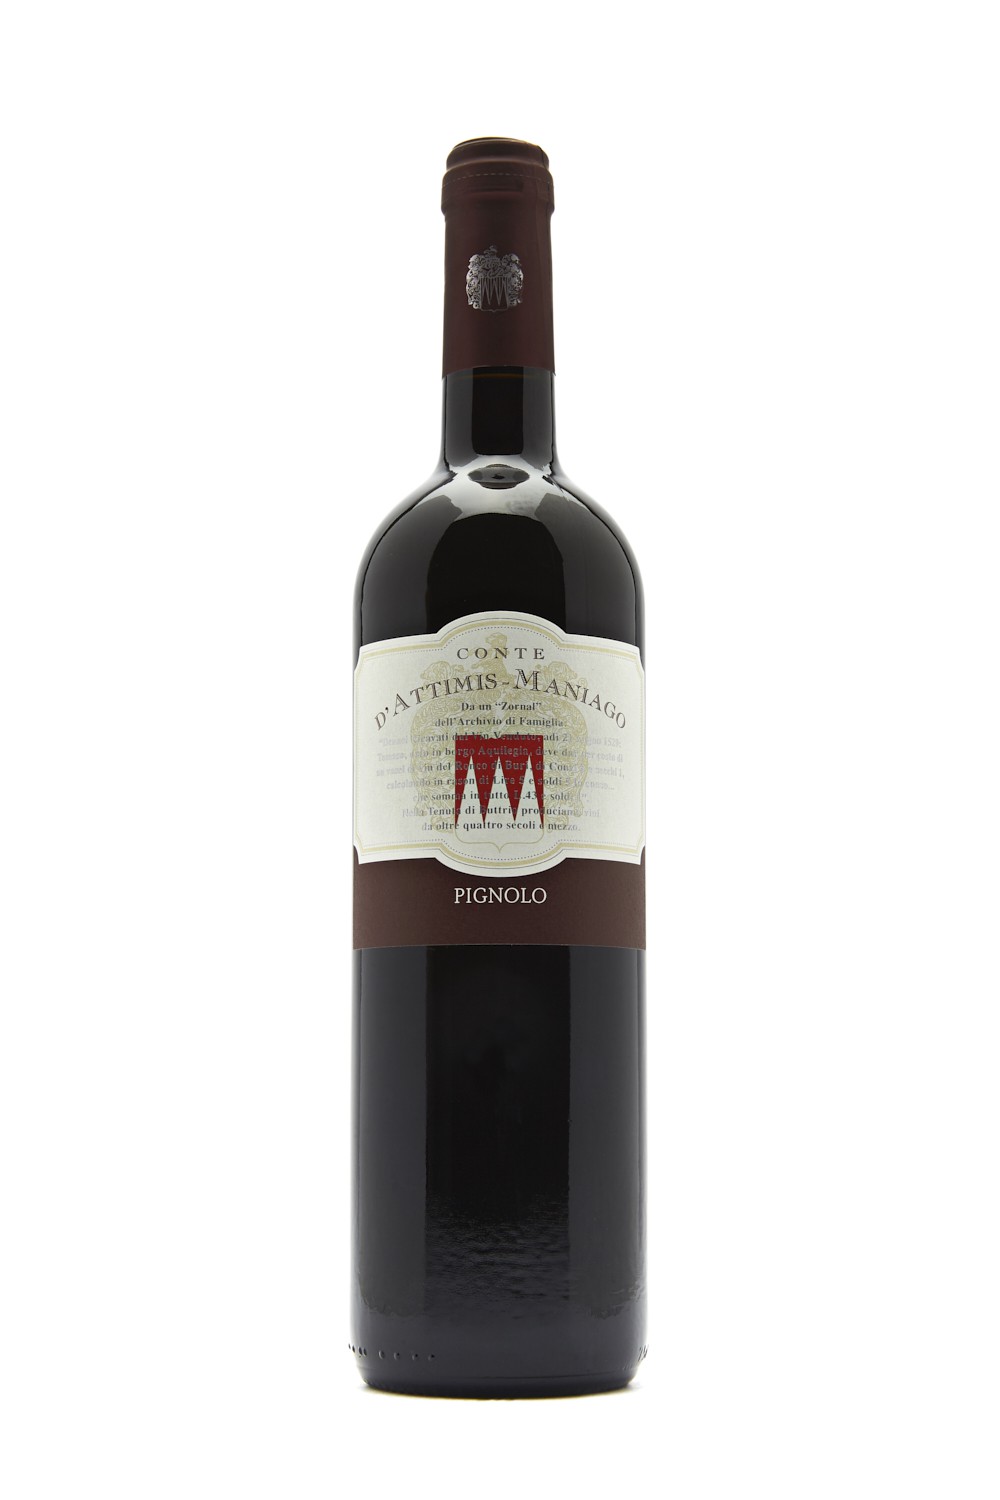 Conte d'Attimis Maniago Pignolo DOC 2009 | Online kaufen bei Senti Vini -  Weine aus Italien